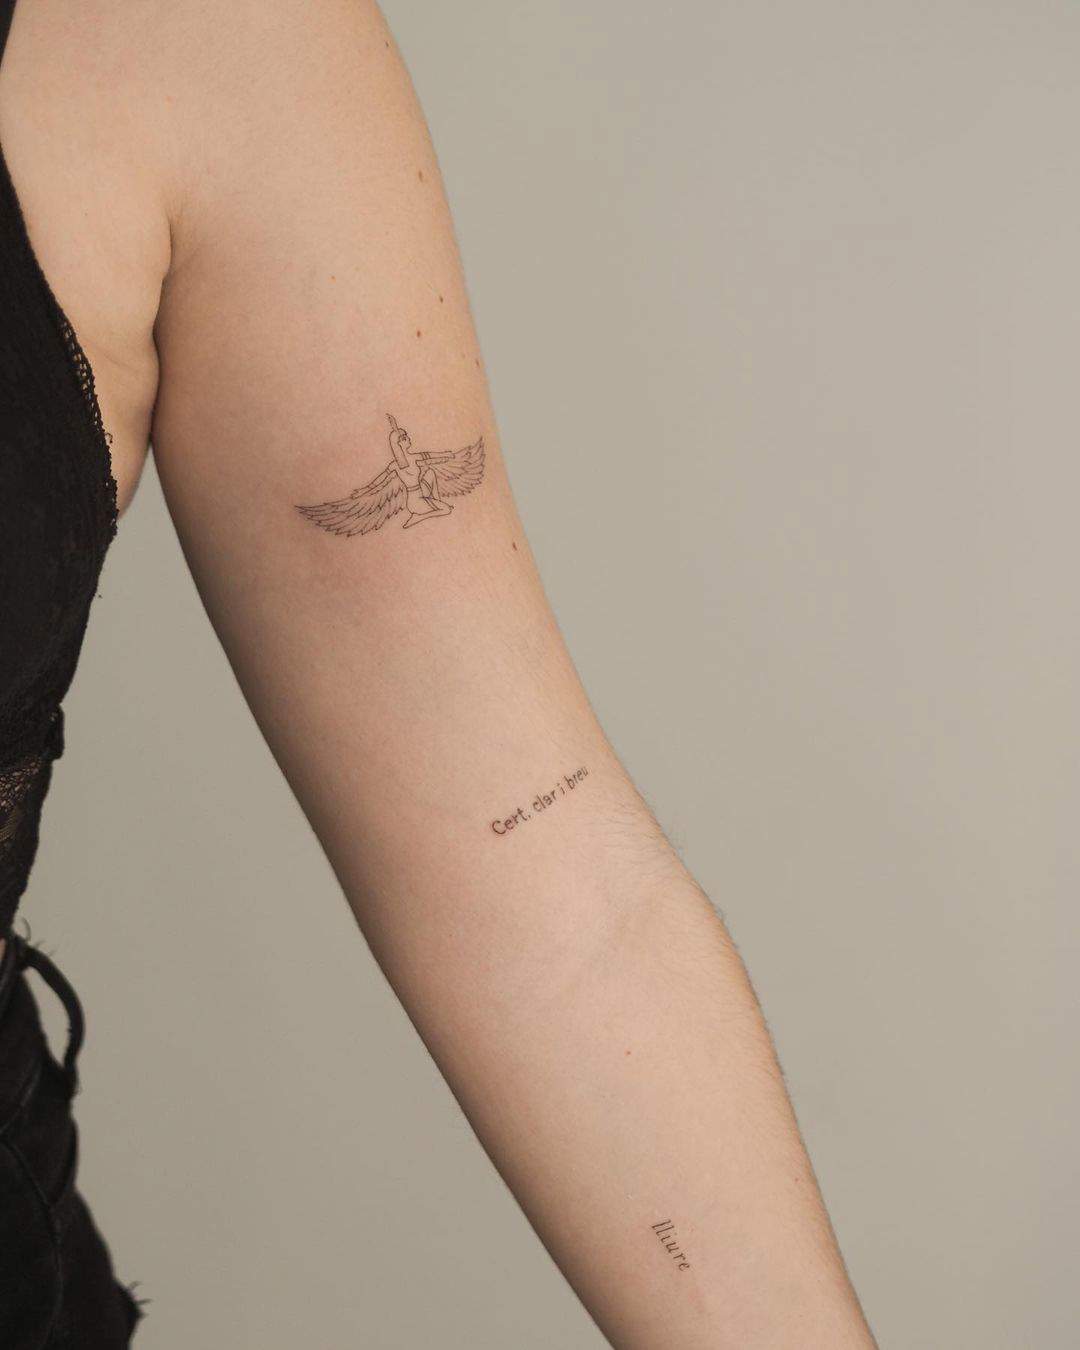 Tatuaje pequeño de inspiración egipcia